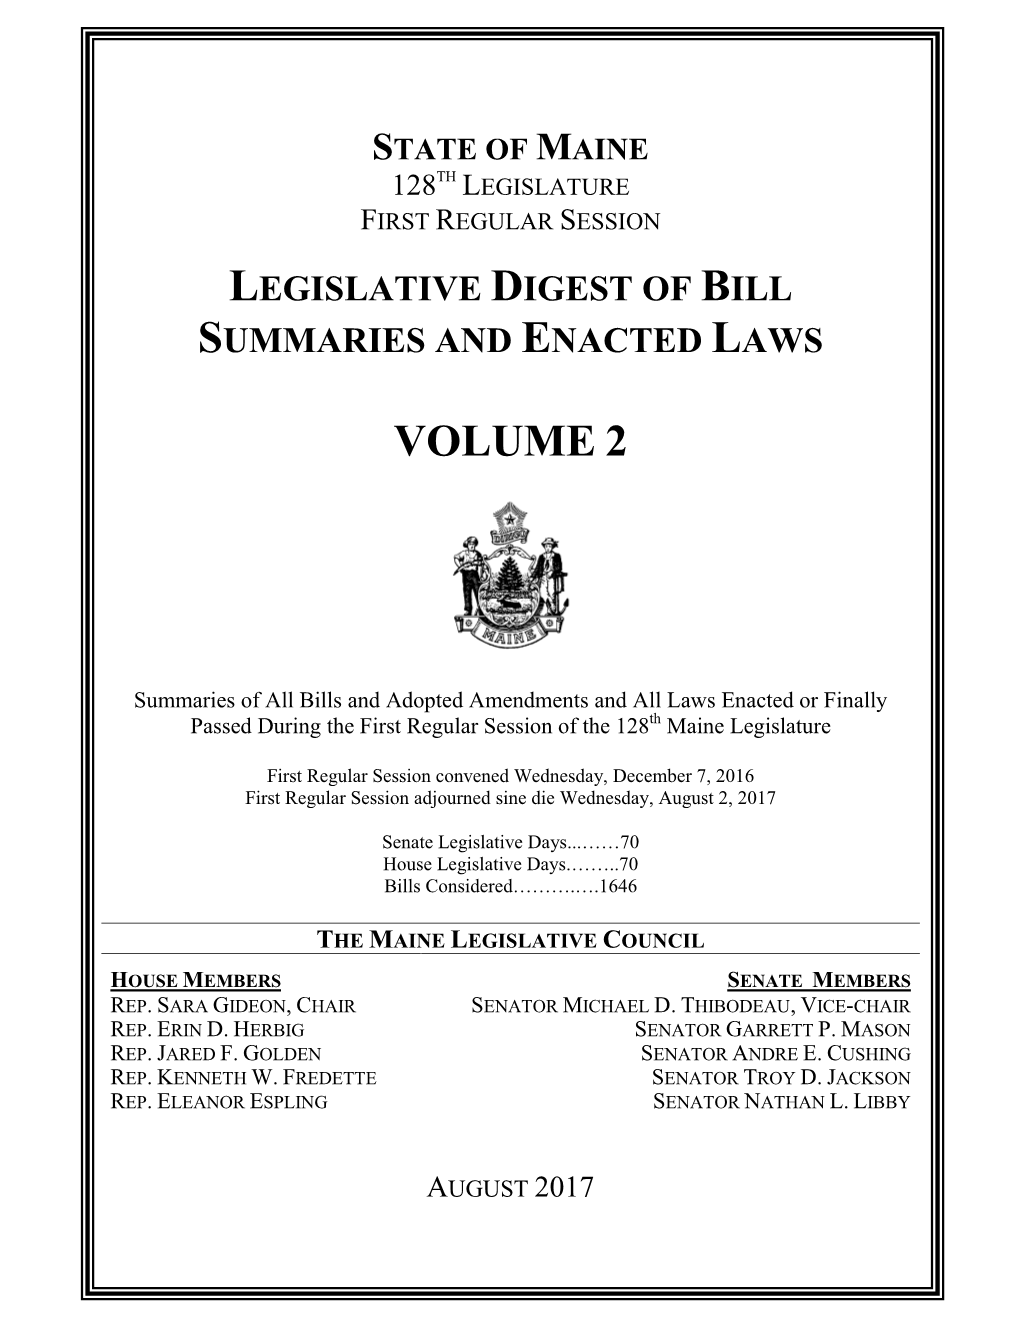 Legislative Digest of Bill Summaries and Enacted Laws